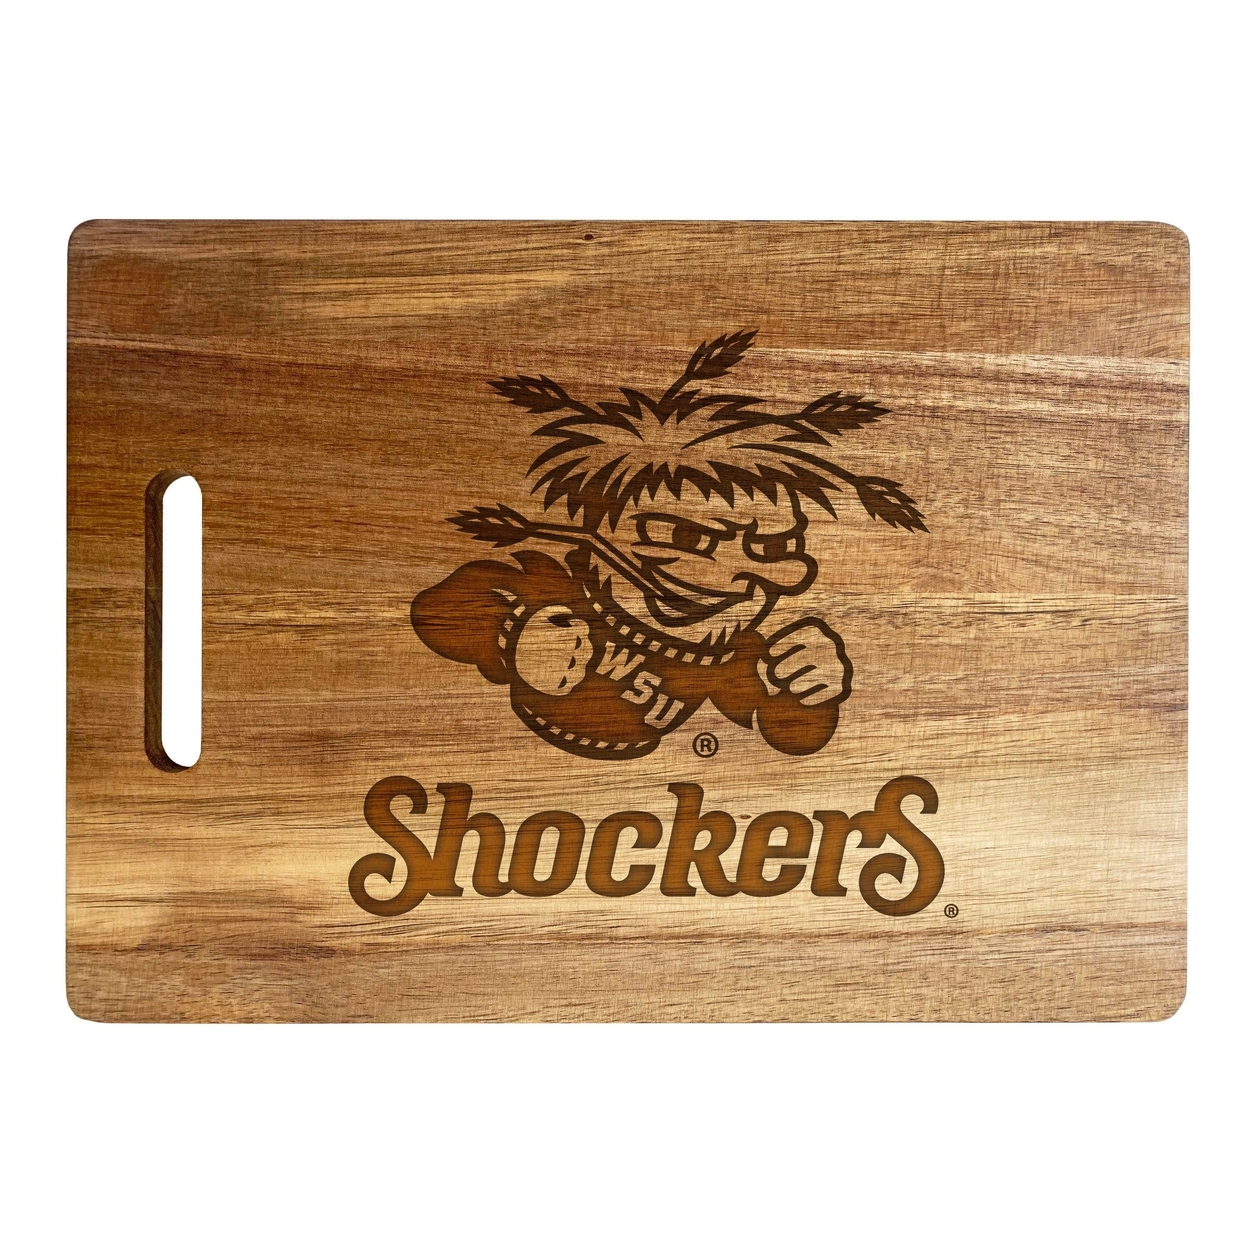 Wichita State Shockers Engraved Wooden Cutting Board 10 X 14 Acacia Wood - Large Engraving